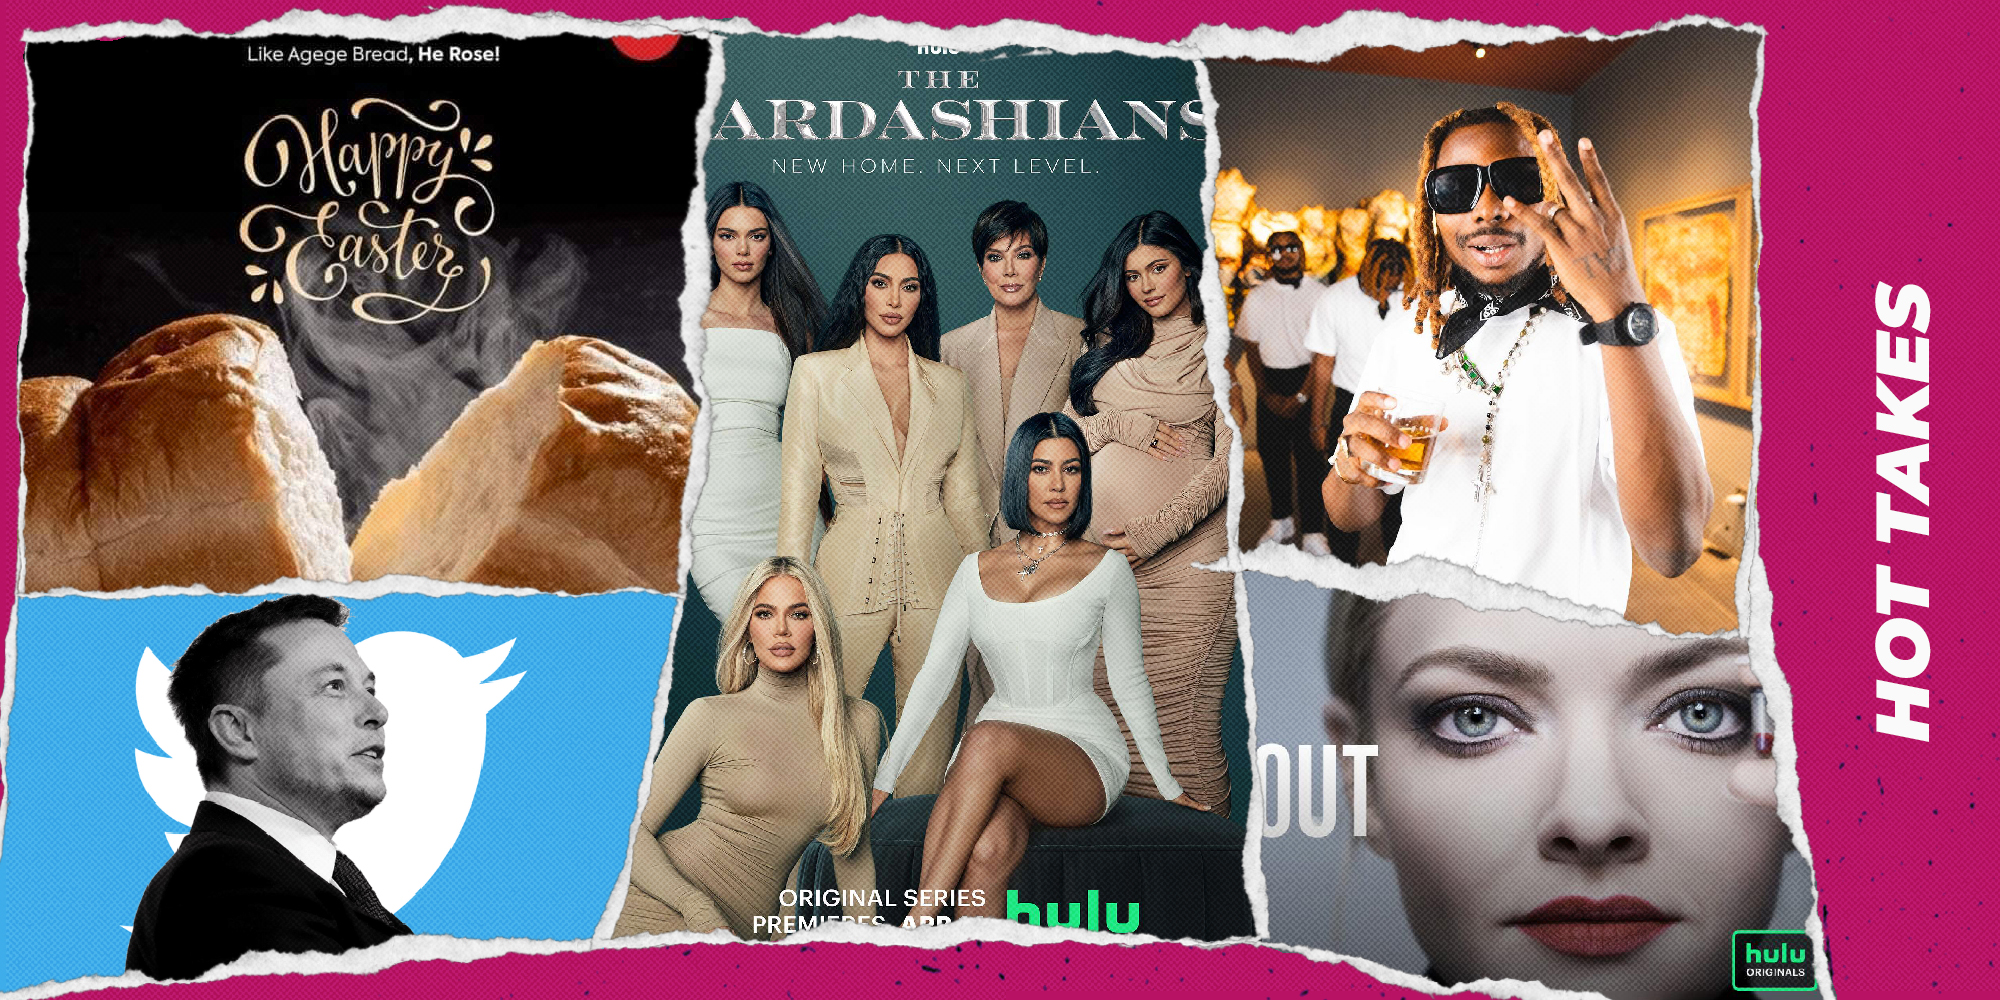 Hot Takes: ‘The Kardashians’, Coachella Fashion, Sungba’s Hype & More